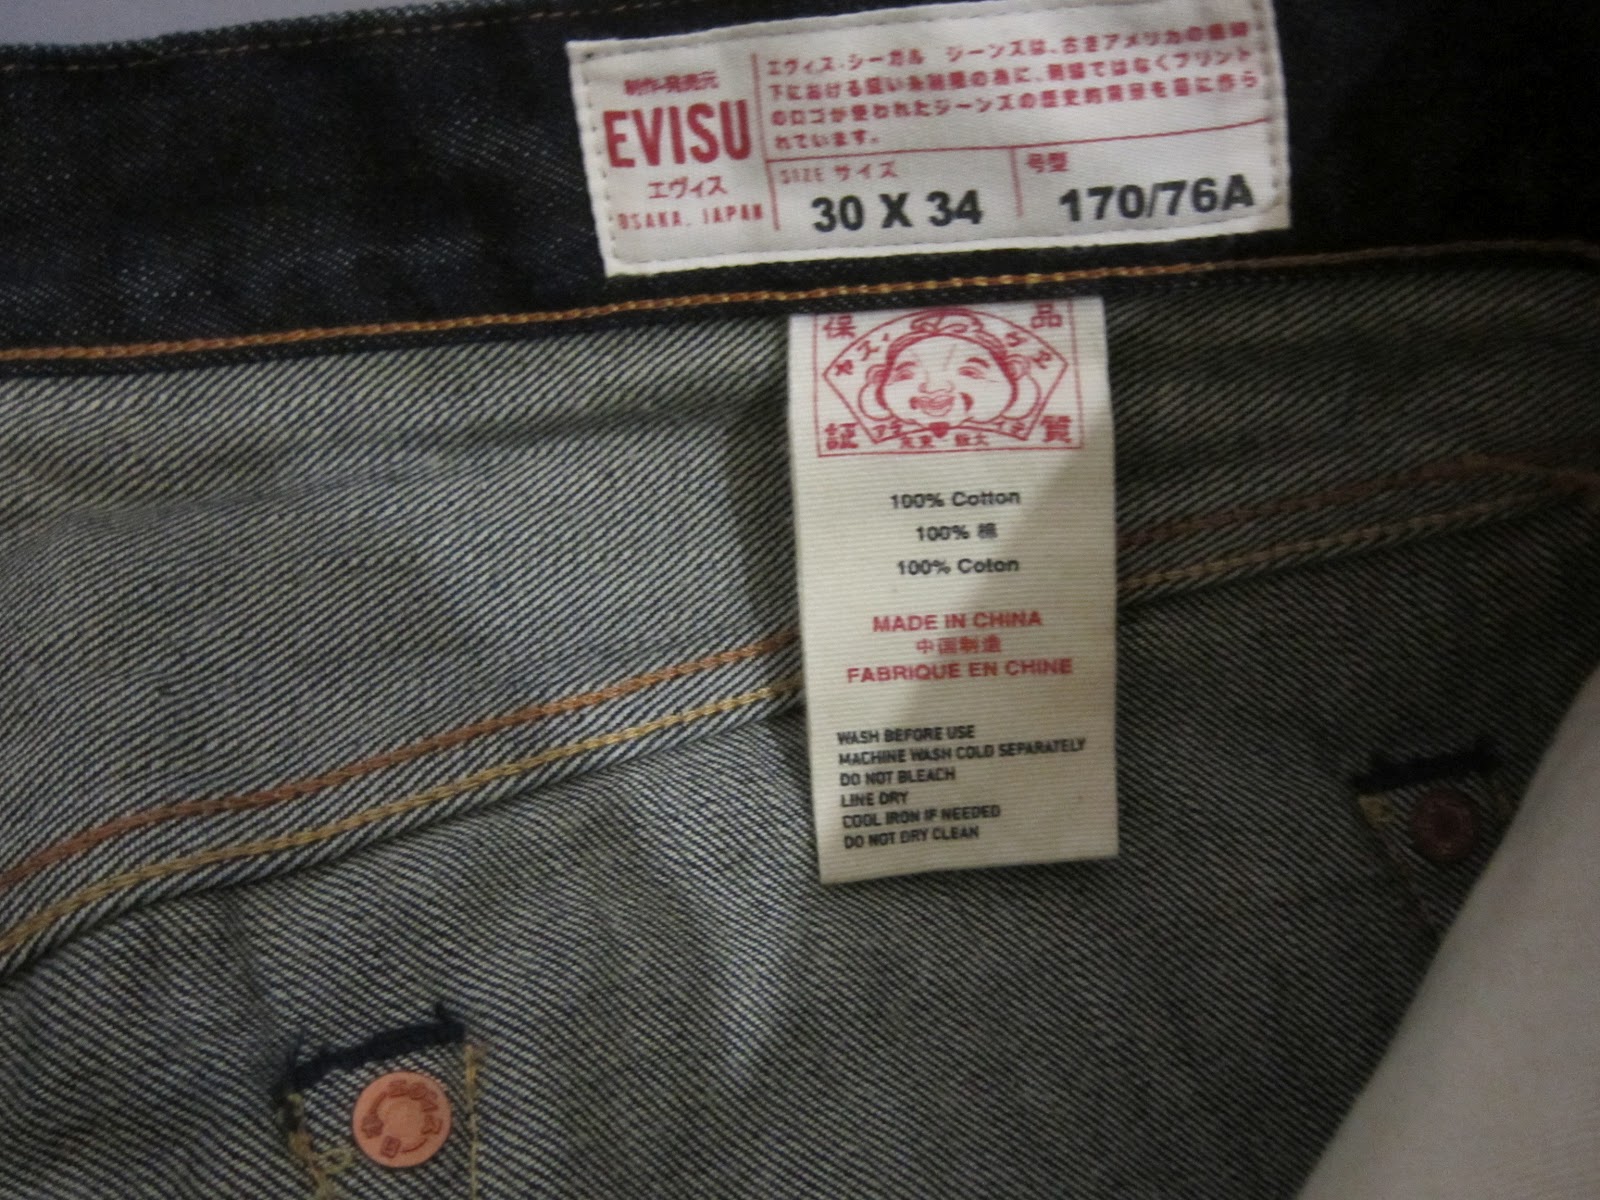 Nurih's Outlet: SOLD! Evisu Jeans Lot 2008 Selvedge - Size 30x34